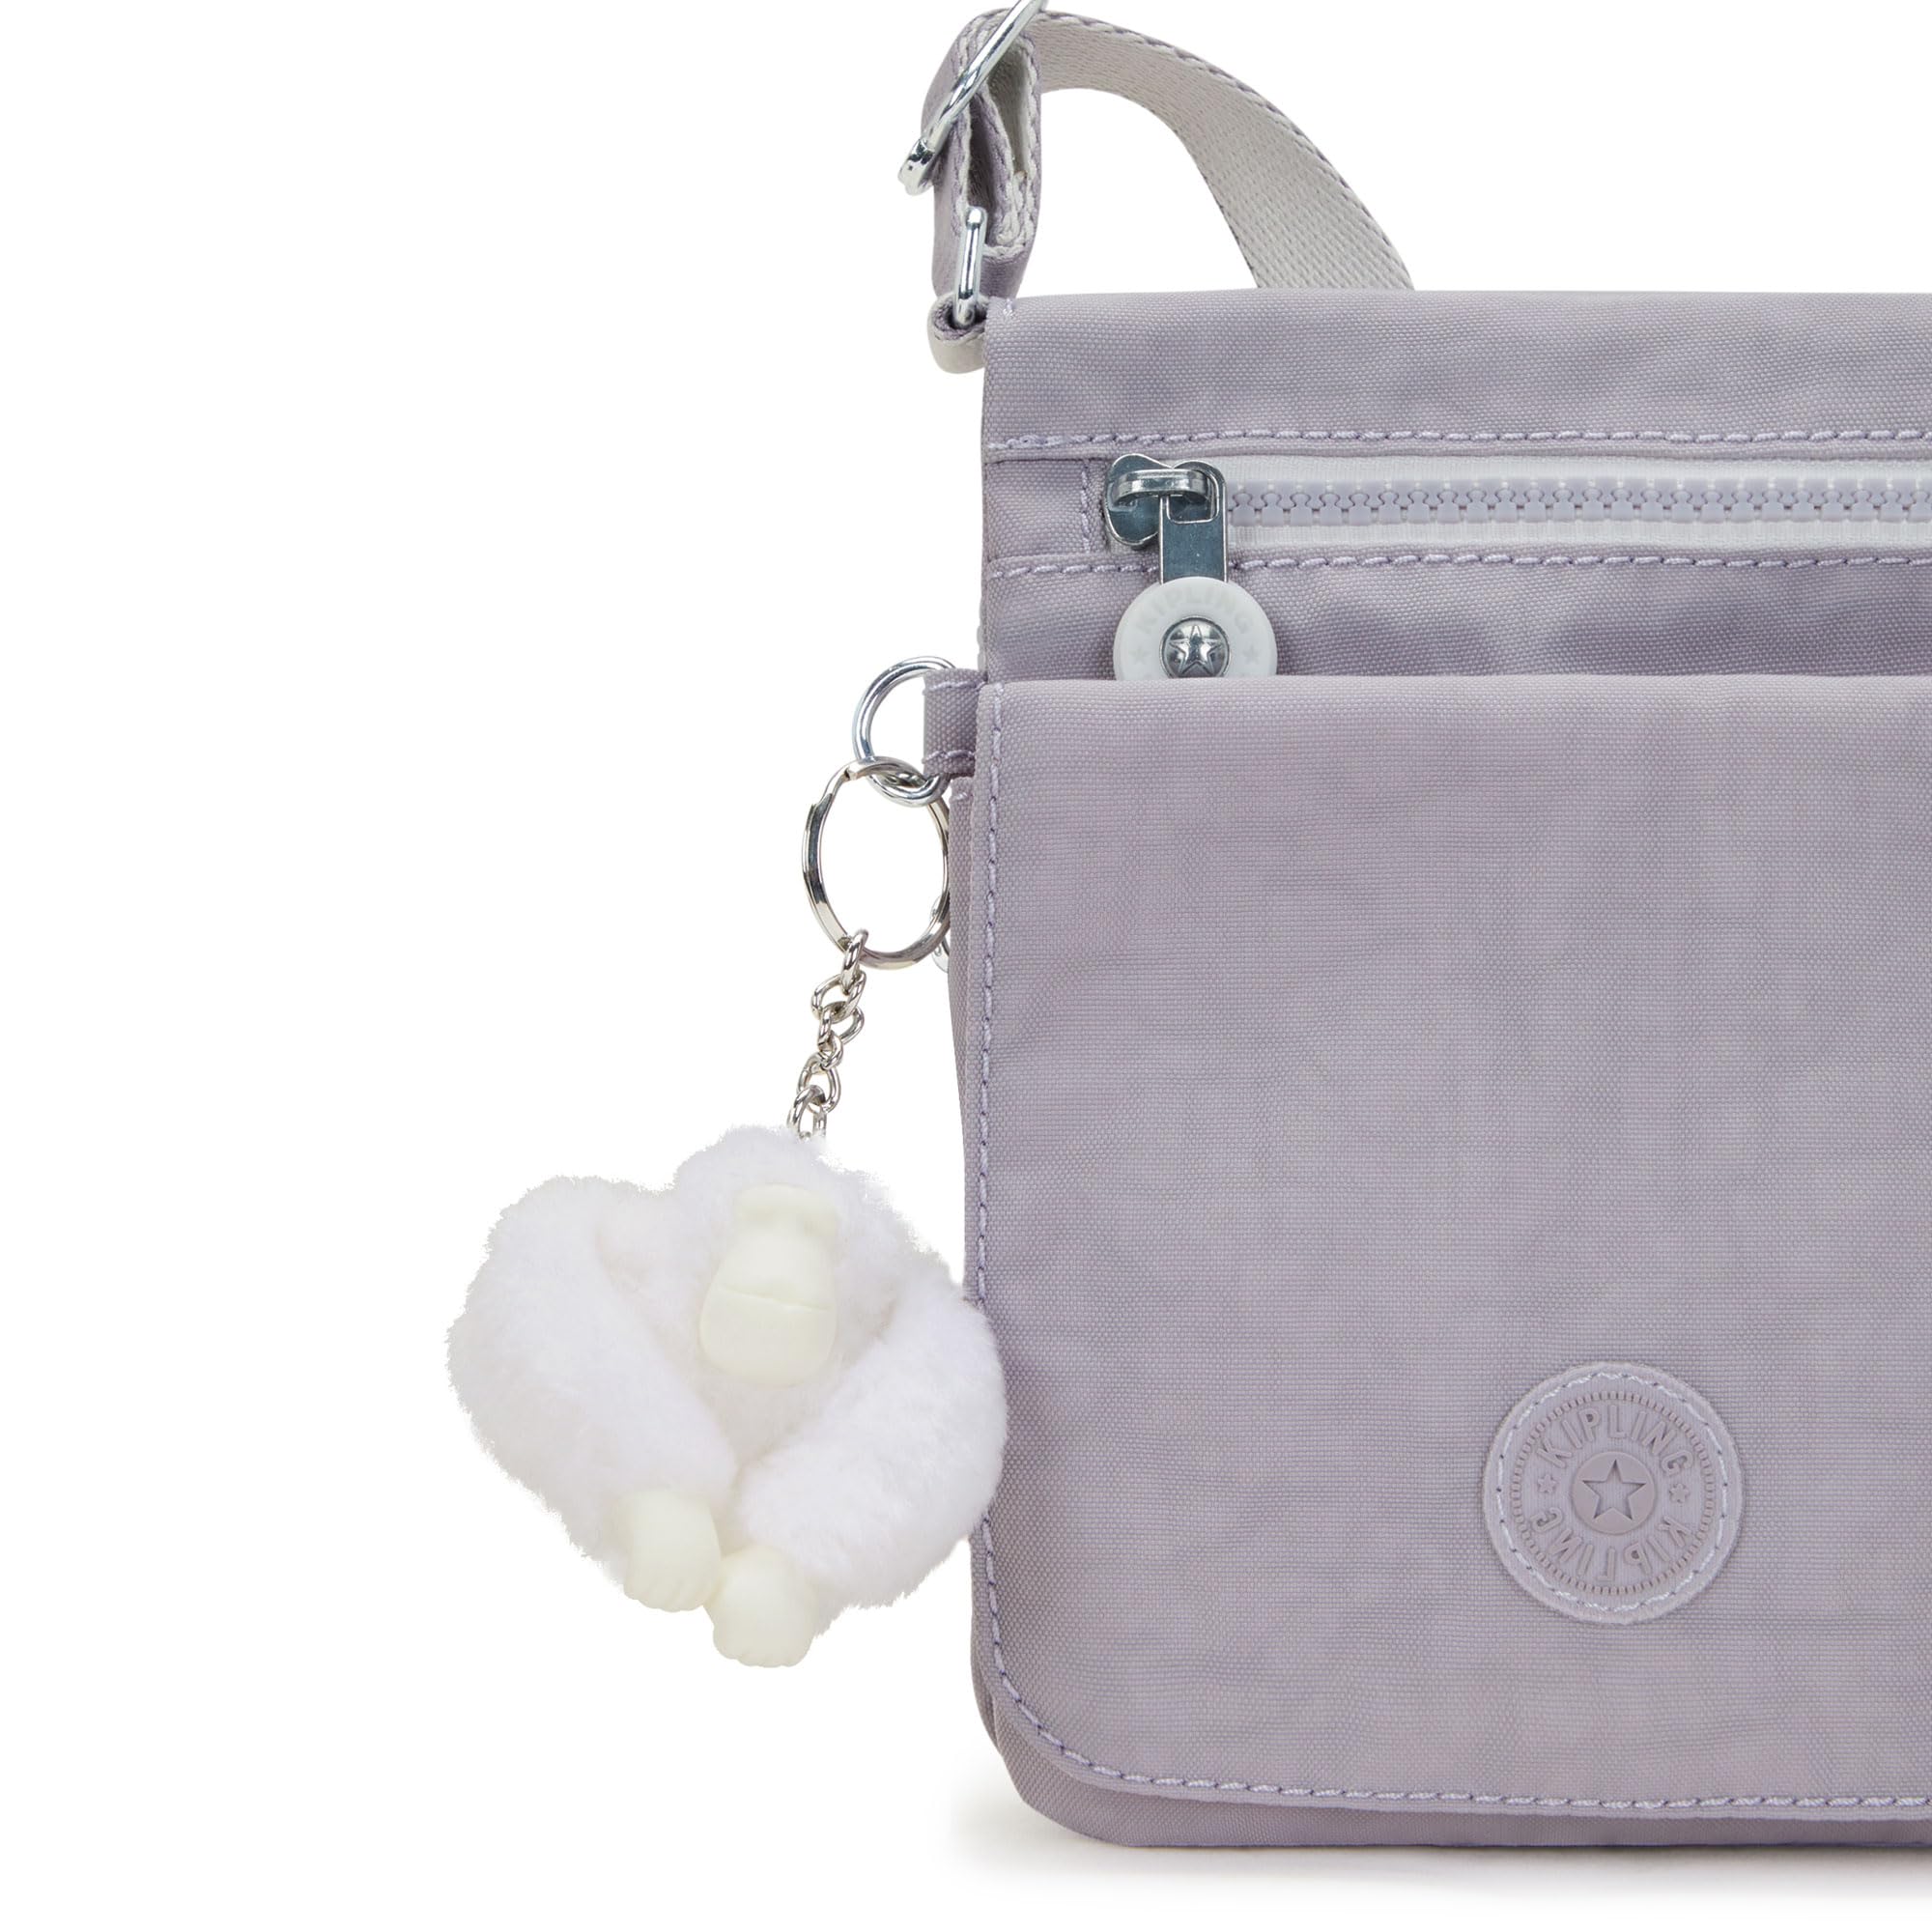 Kipling Women's New Eldorado Minibag, Lightweight Crossbody, Nylon Travel Bag